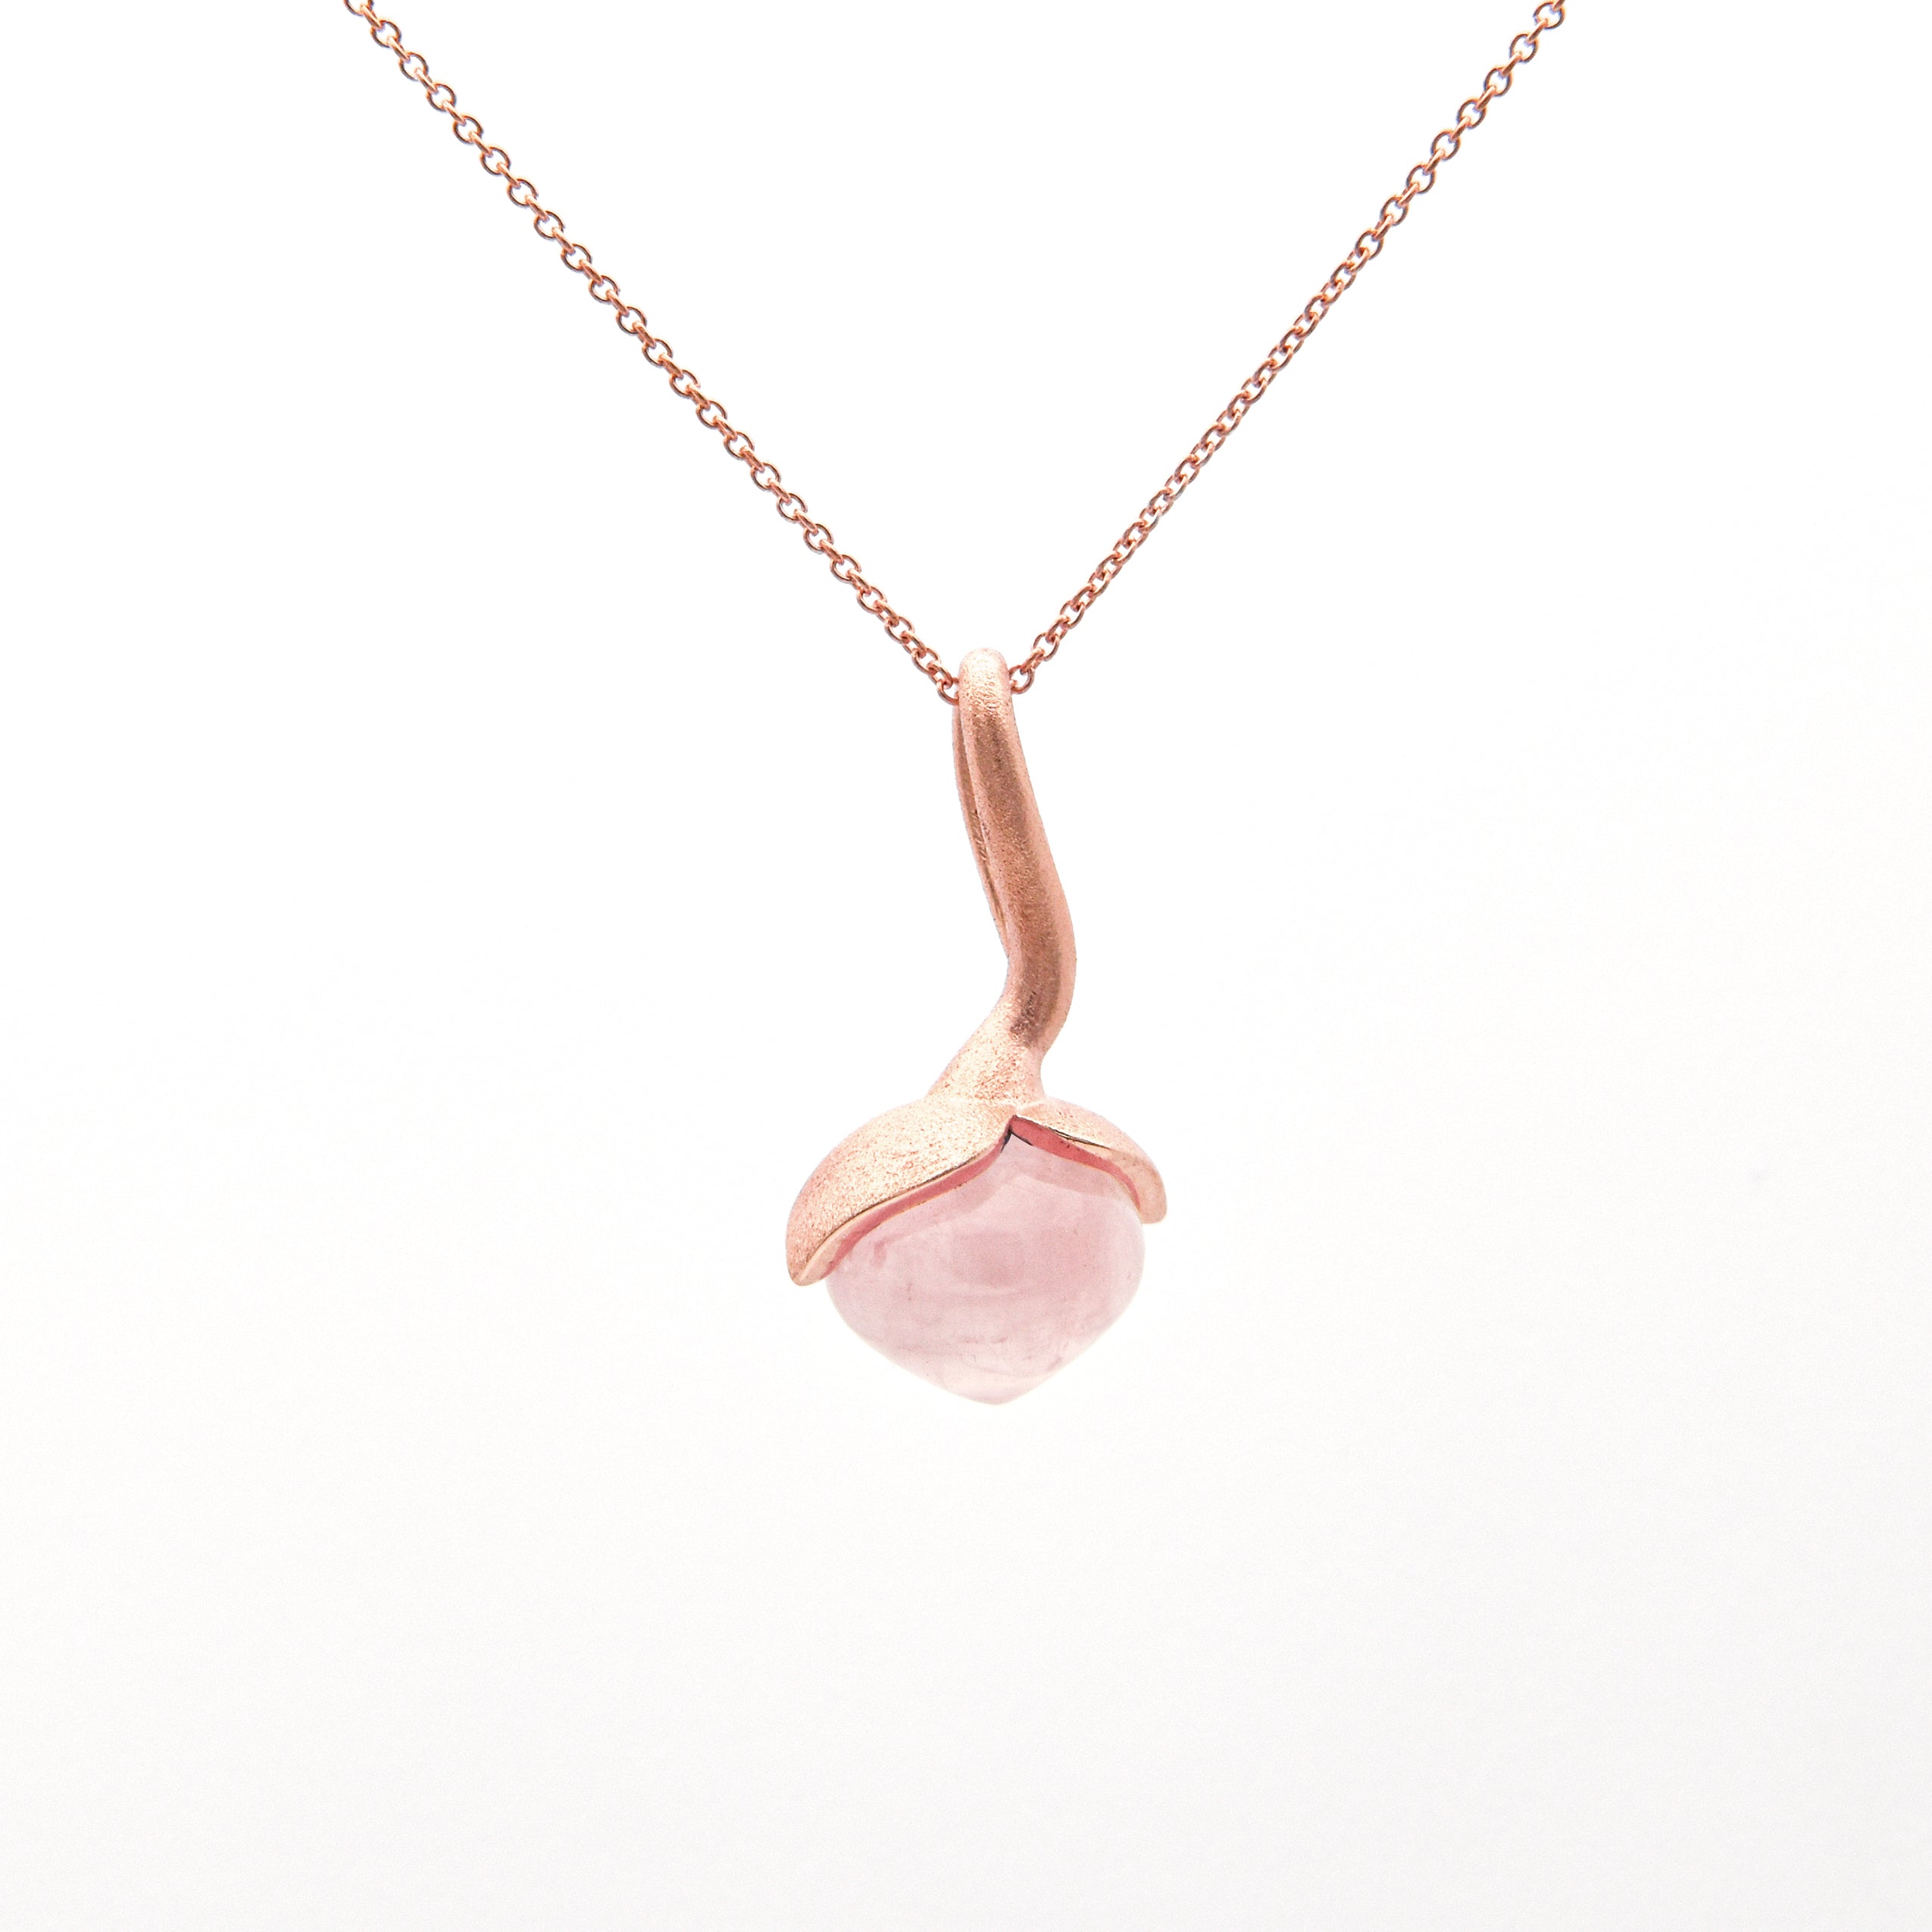 Dolce pendant "big" with rose quartz 925/-